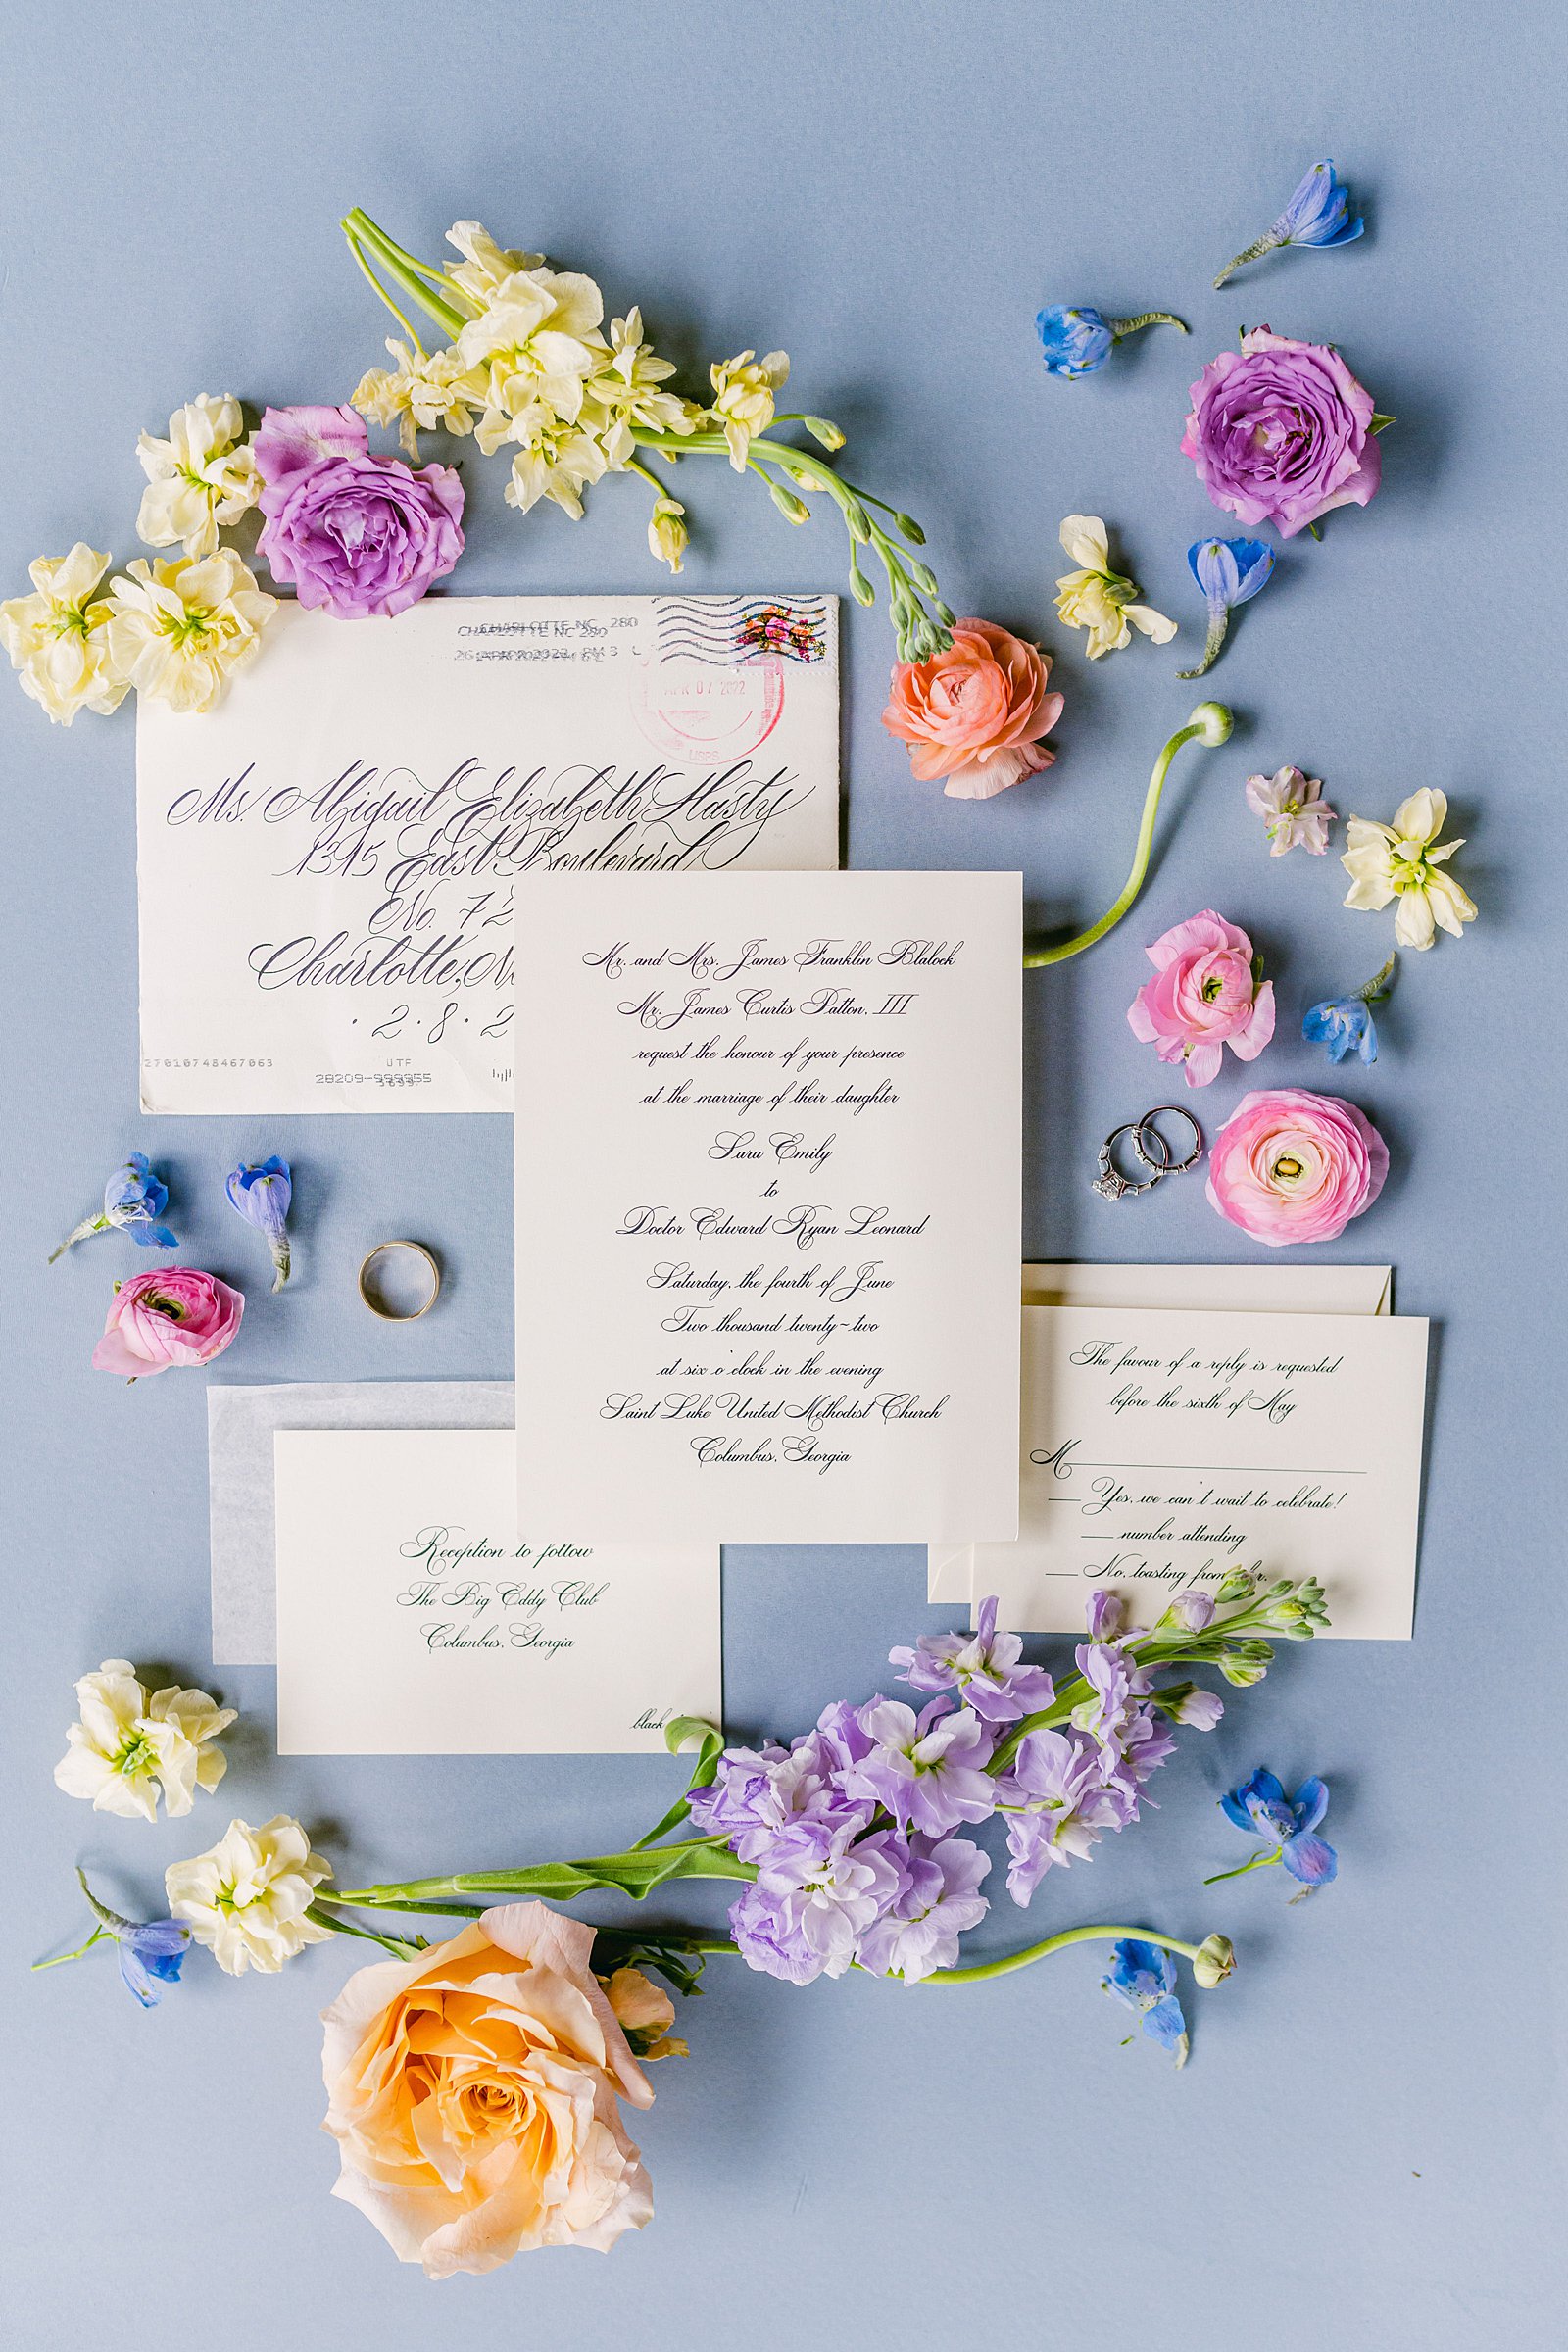 columbus ga wedding
wedding invitation suite with blue background